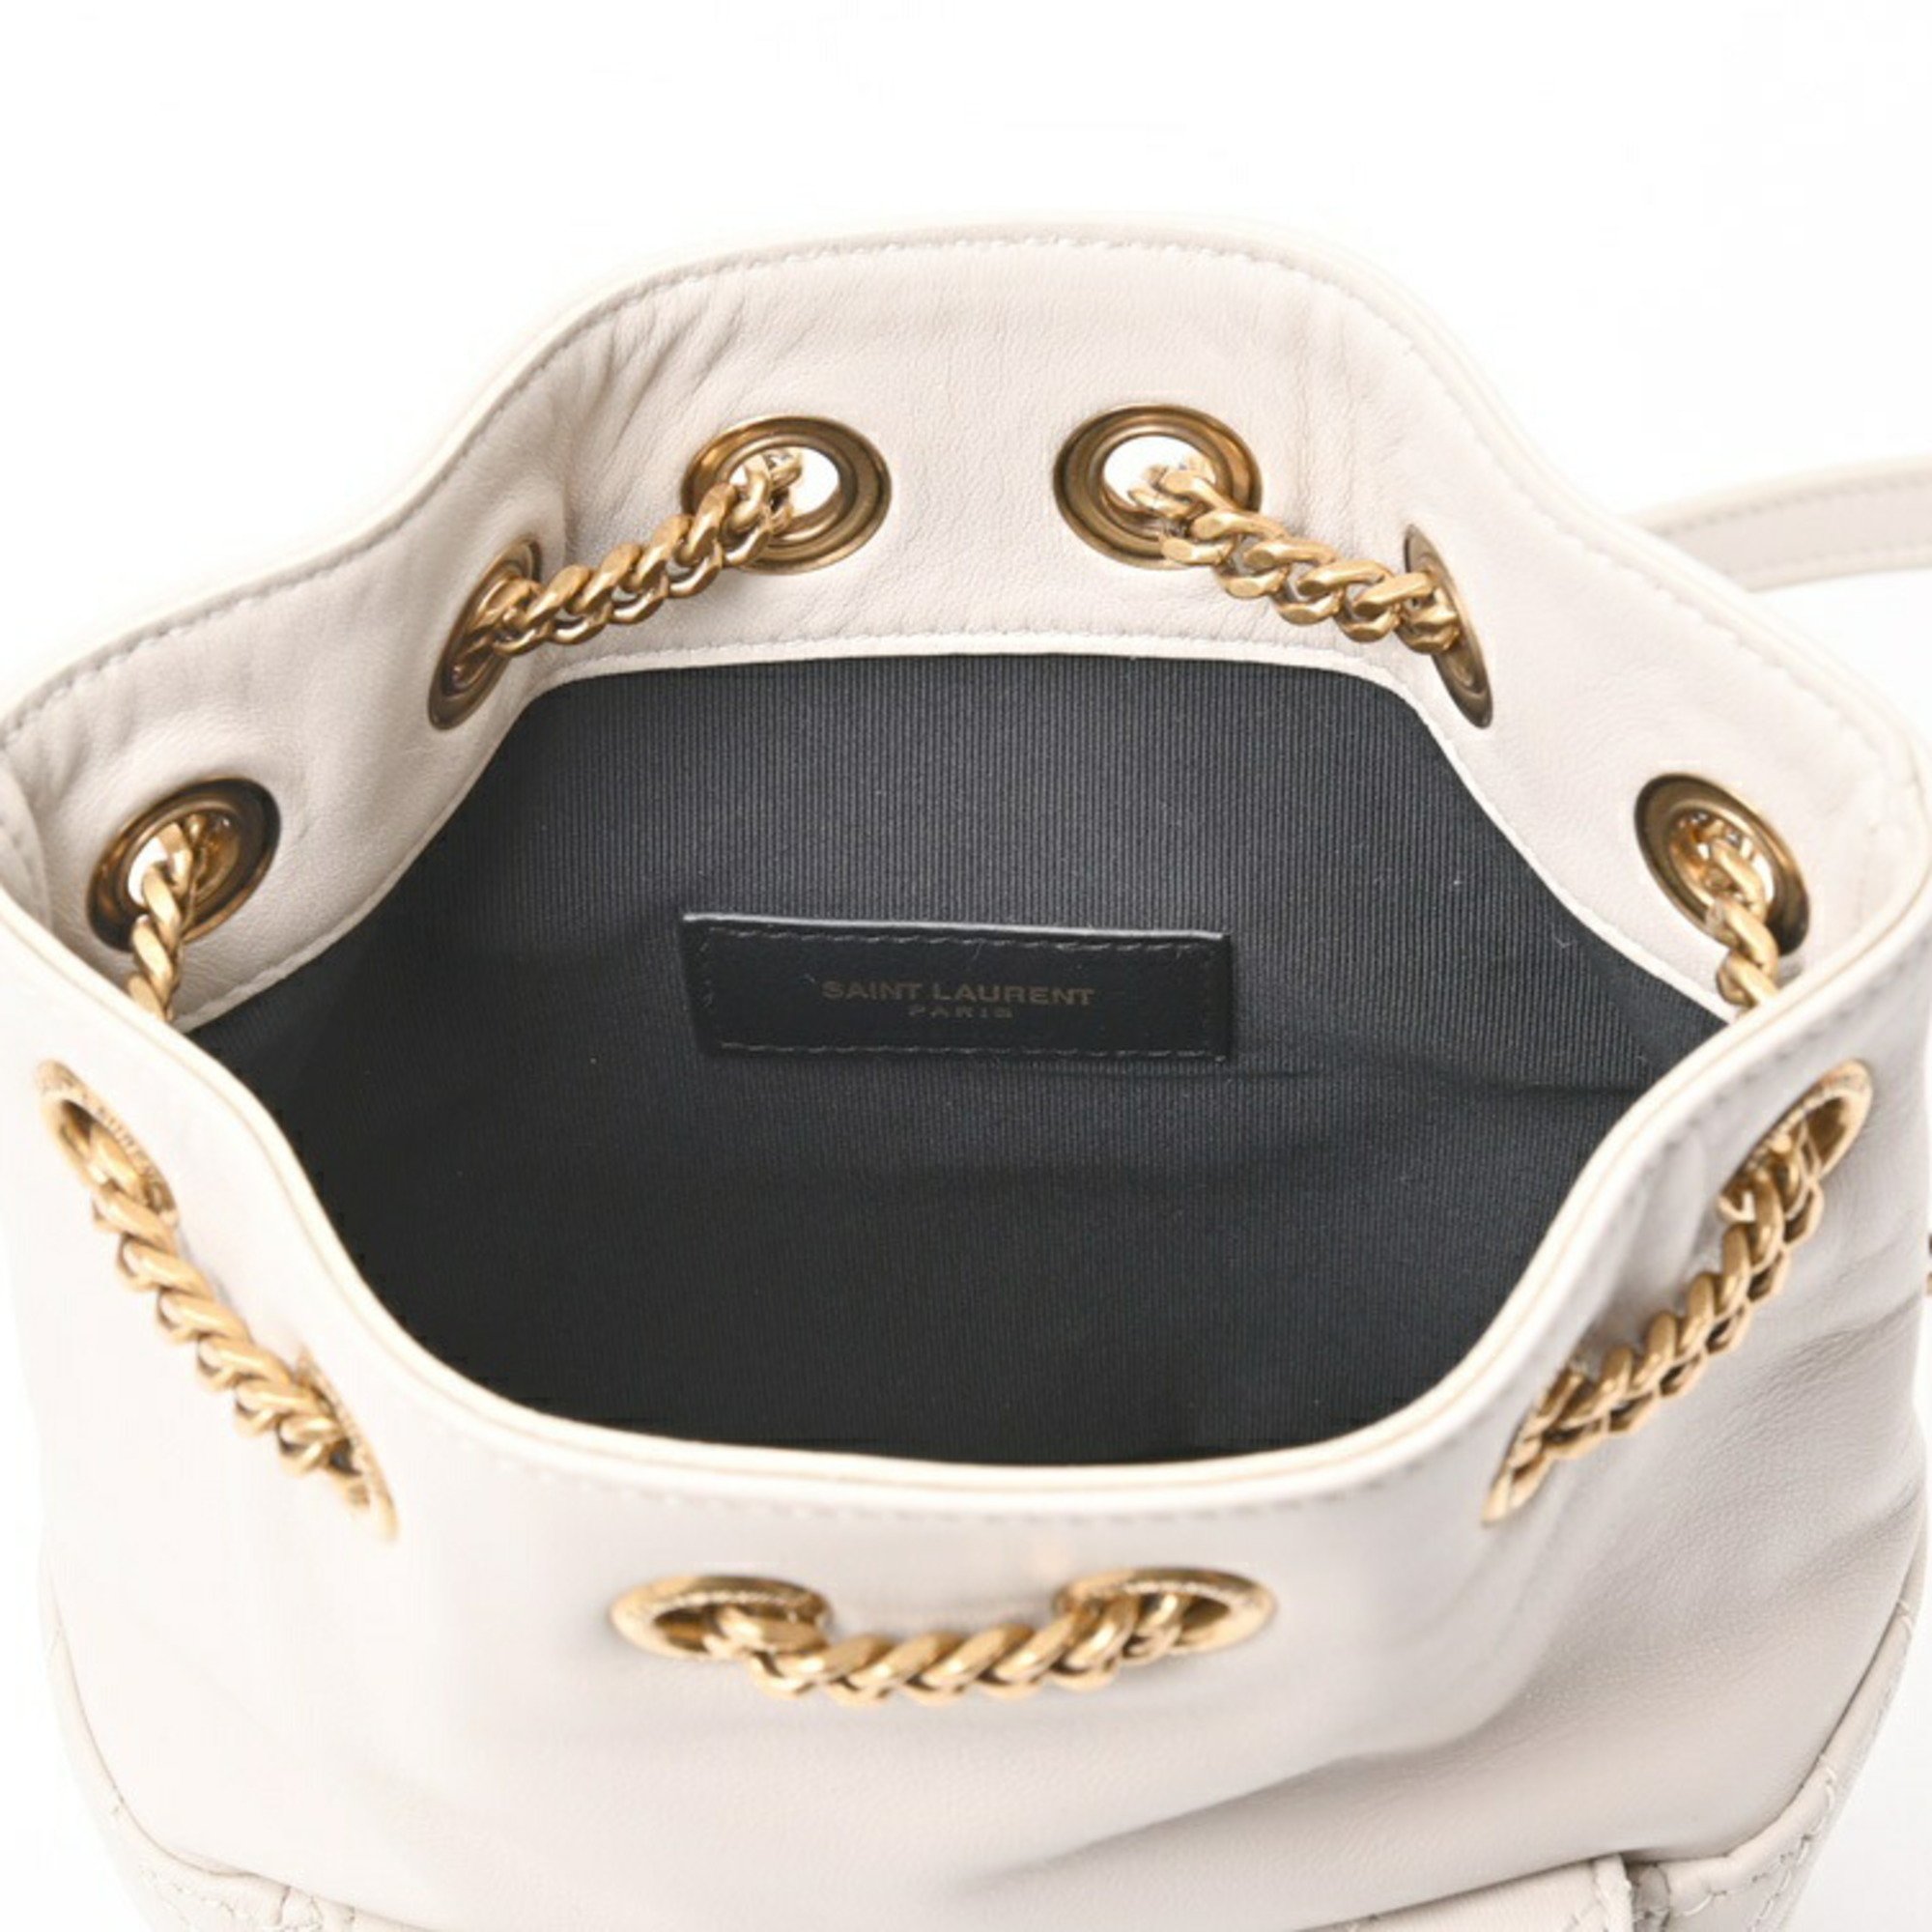 Saint Laurent Joe Bucket Bag Chain Shoulder 701631 Lambskin Quilted Blanc (Ivory) S-155933